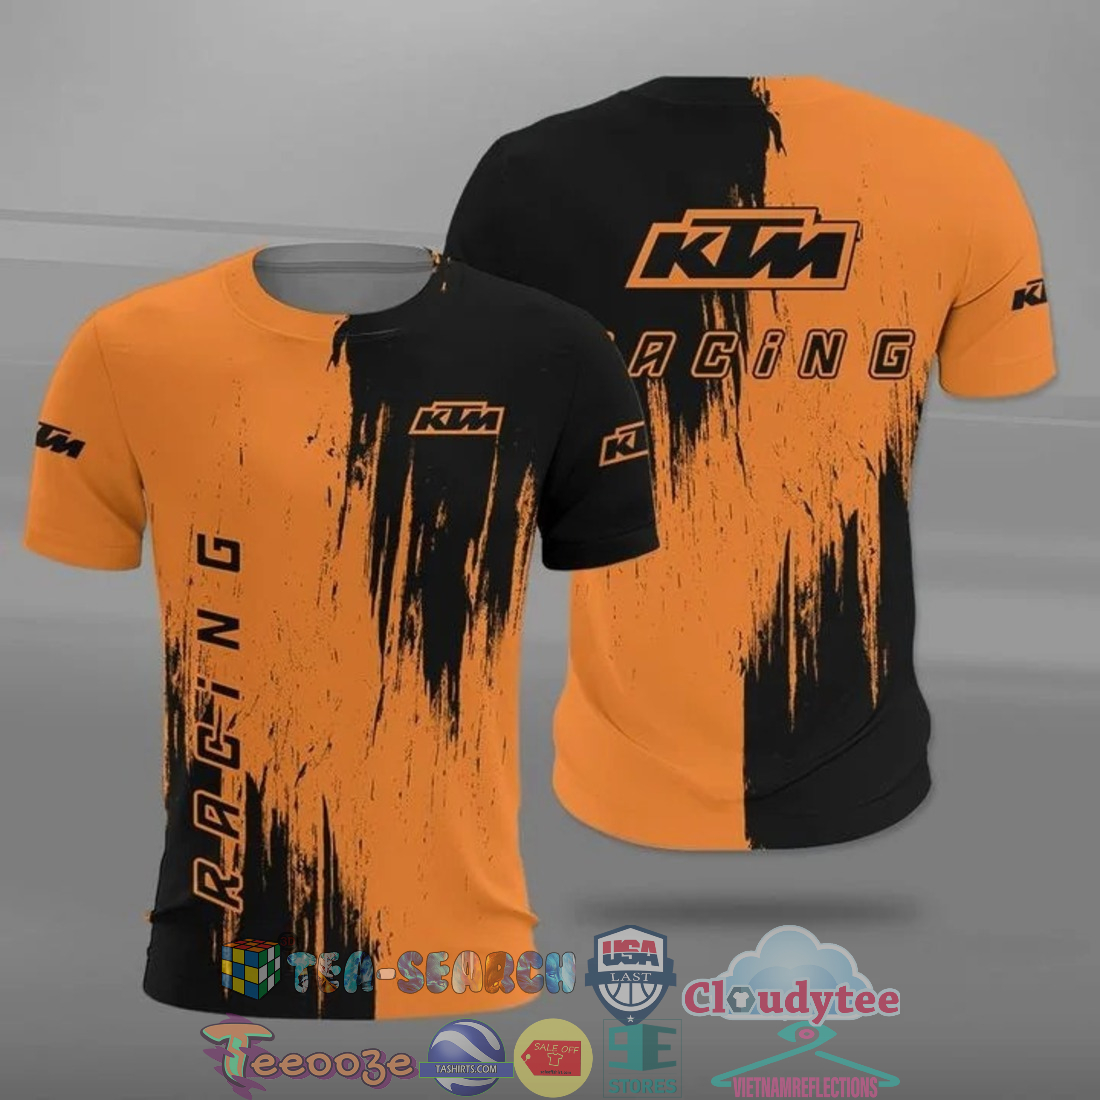 KTM Racing ver 2 all over printed t-shirt hoodie